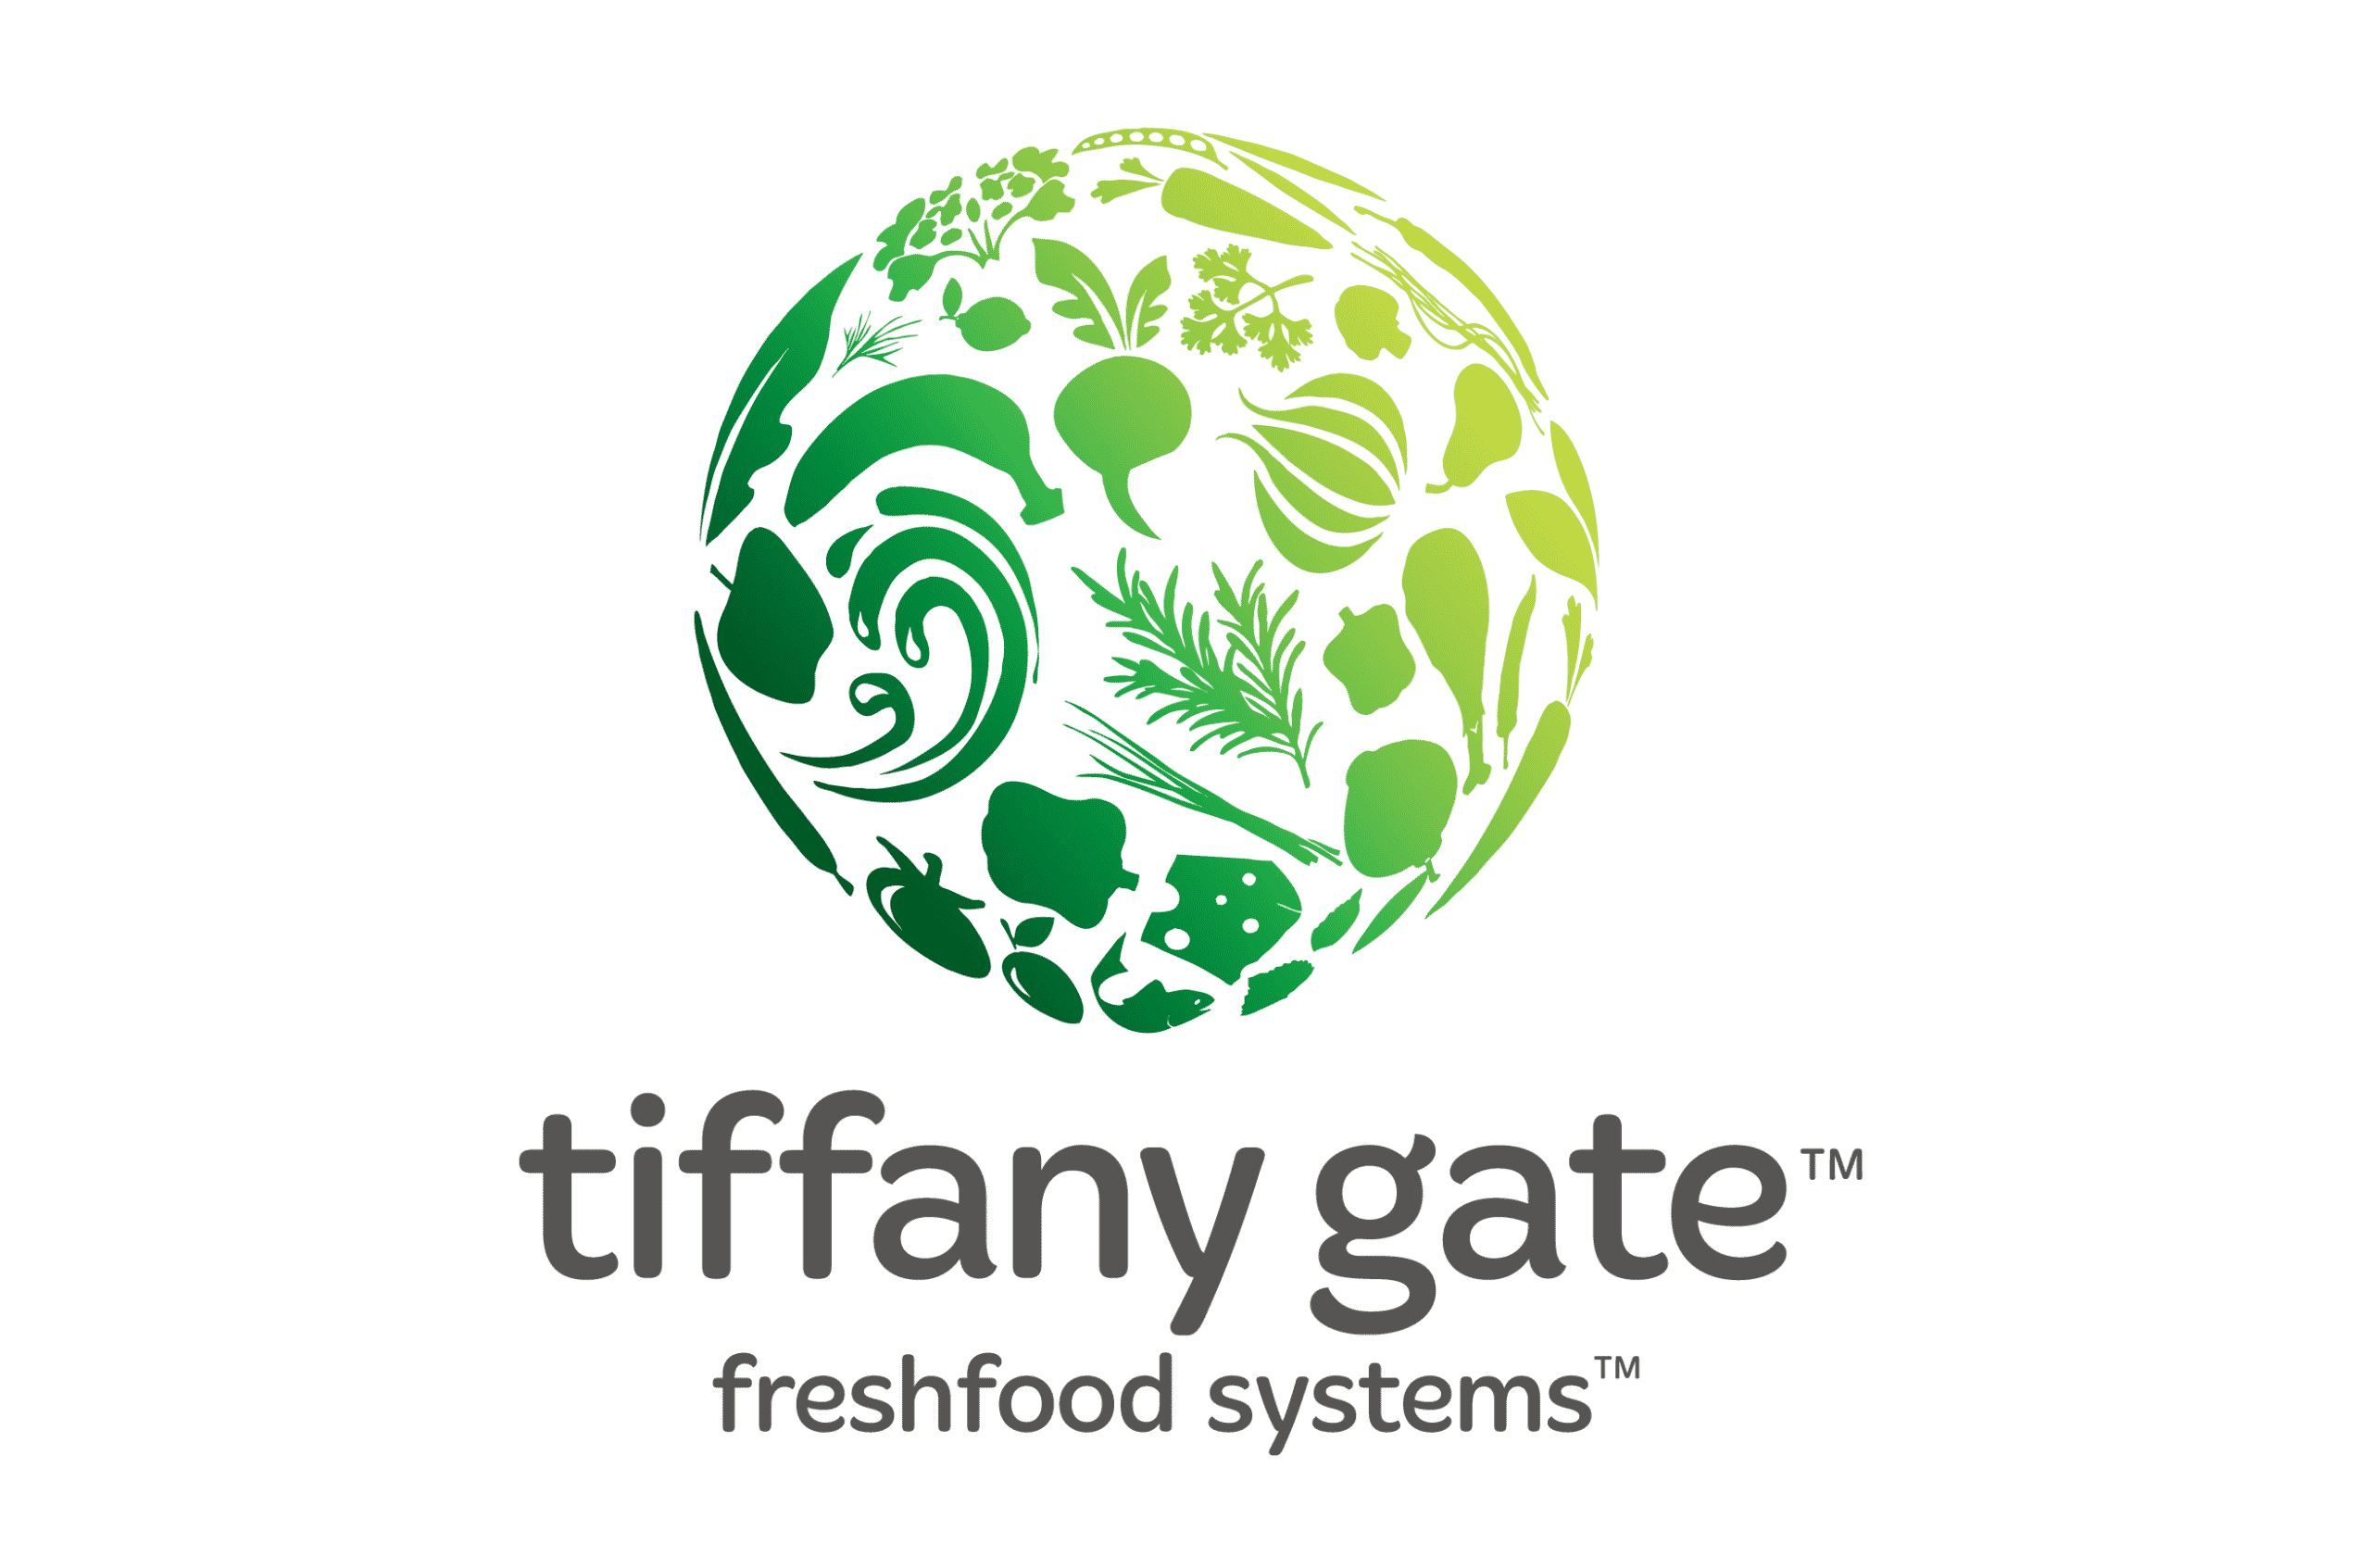 Tiffany Gate Logo. World made up of fresh food, Dark green to yellow gradient. Grey Tiffany Gate text.